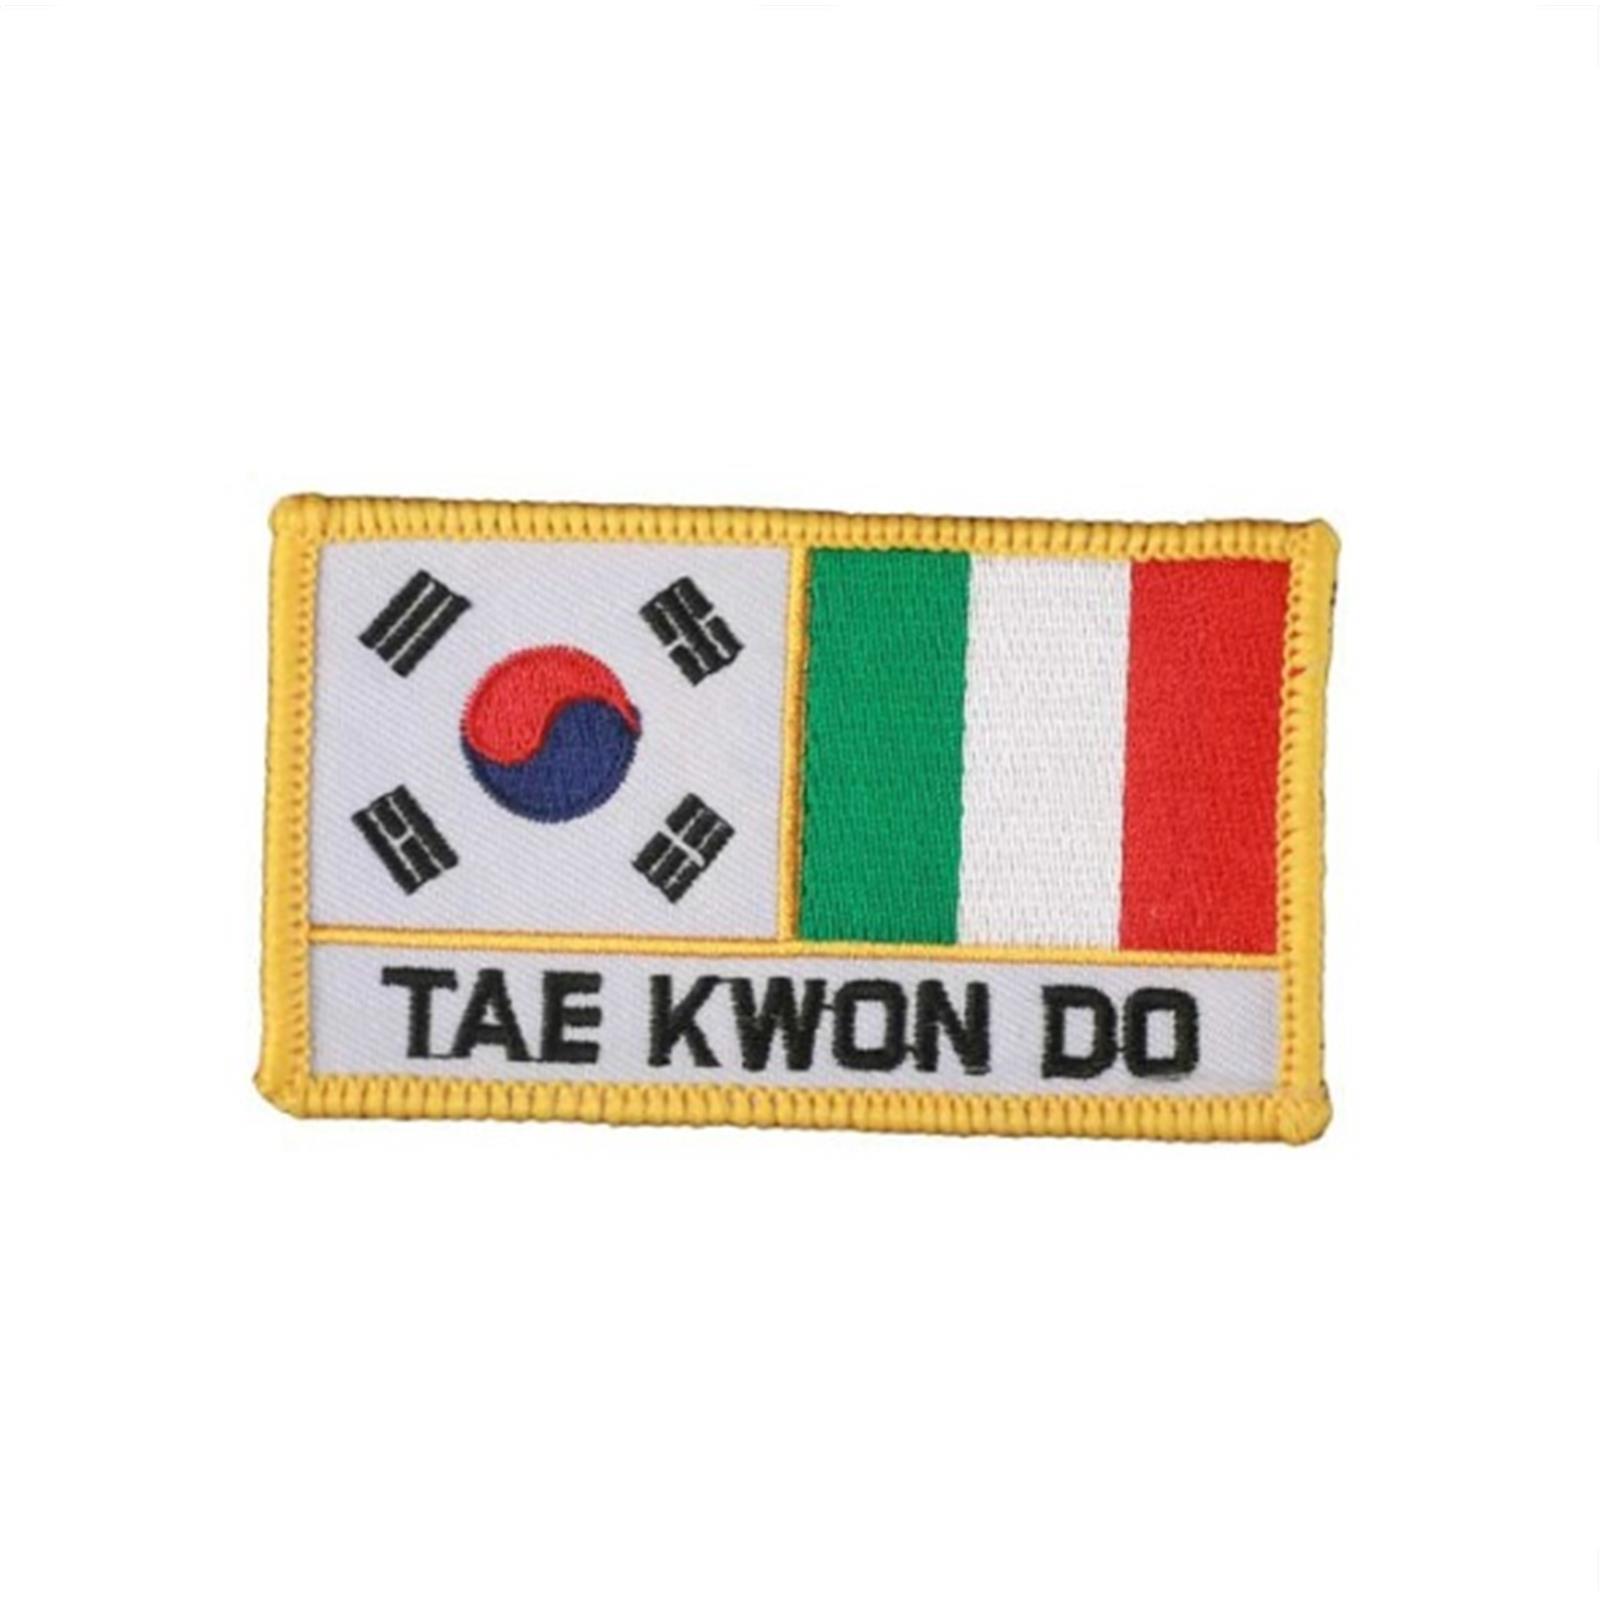 Dae Do TOPPA KOREA - ITALIA TAEKWONDO (5 * 10 cm - BIANCO)